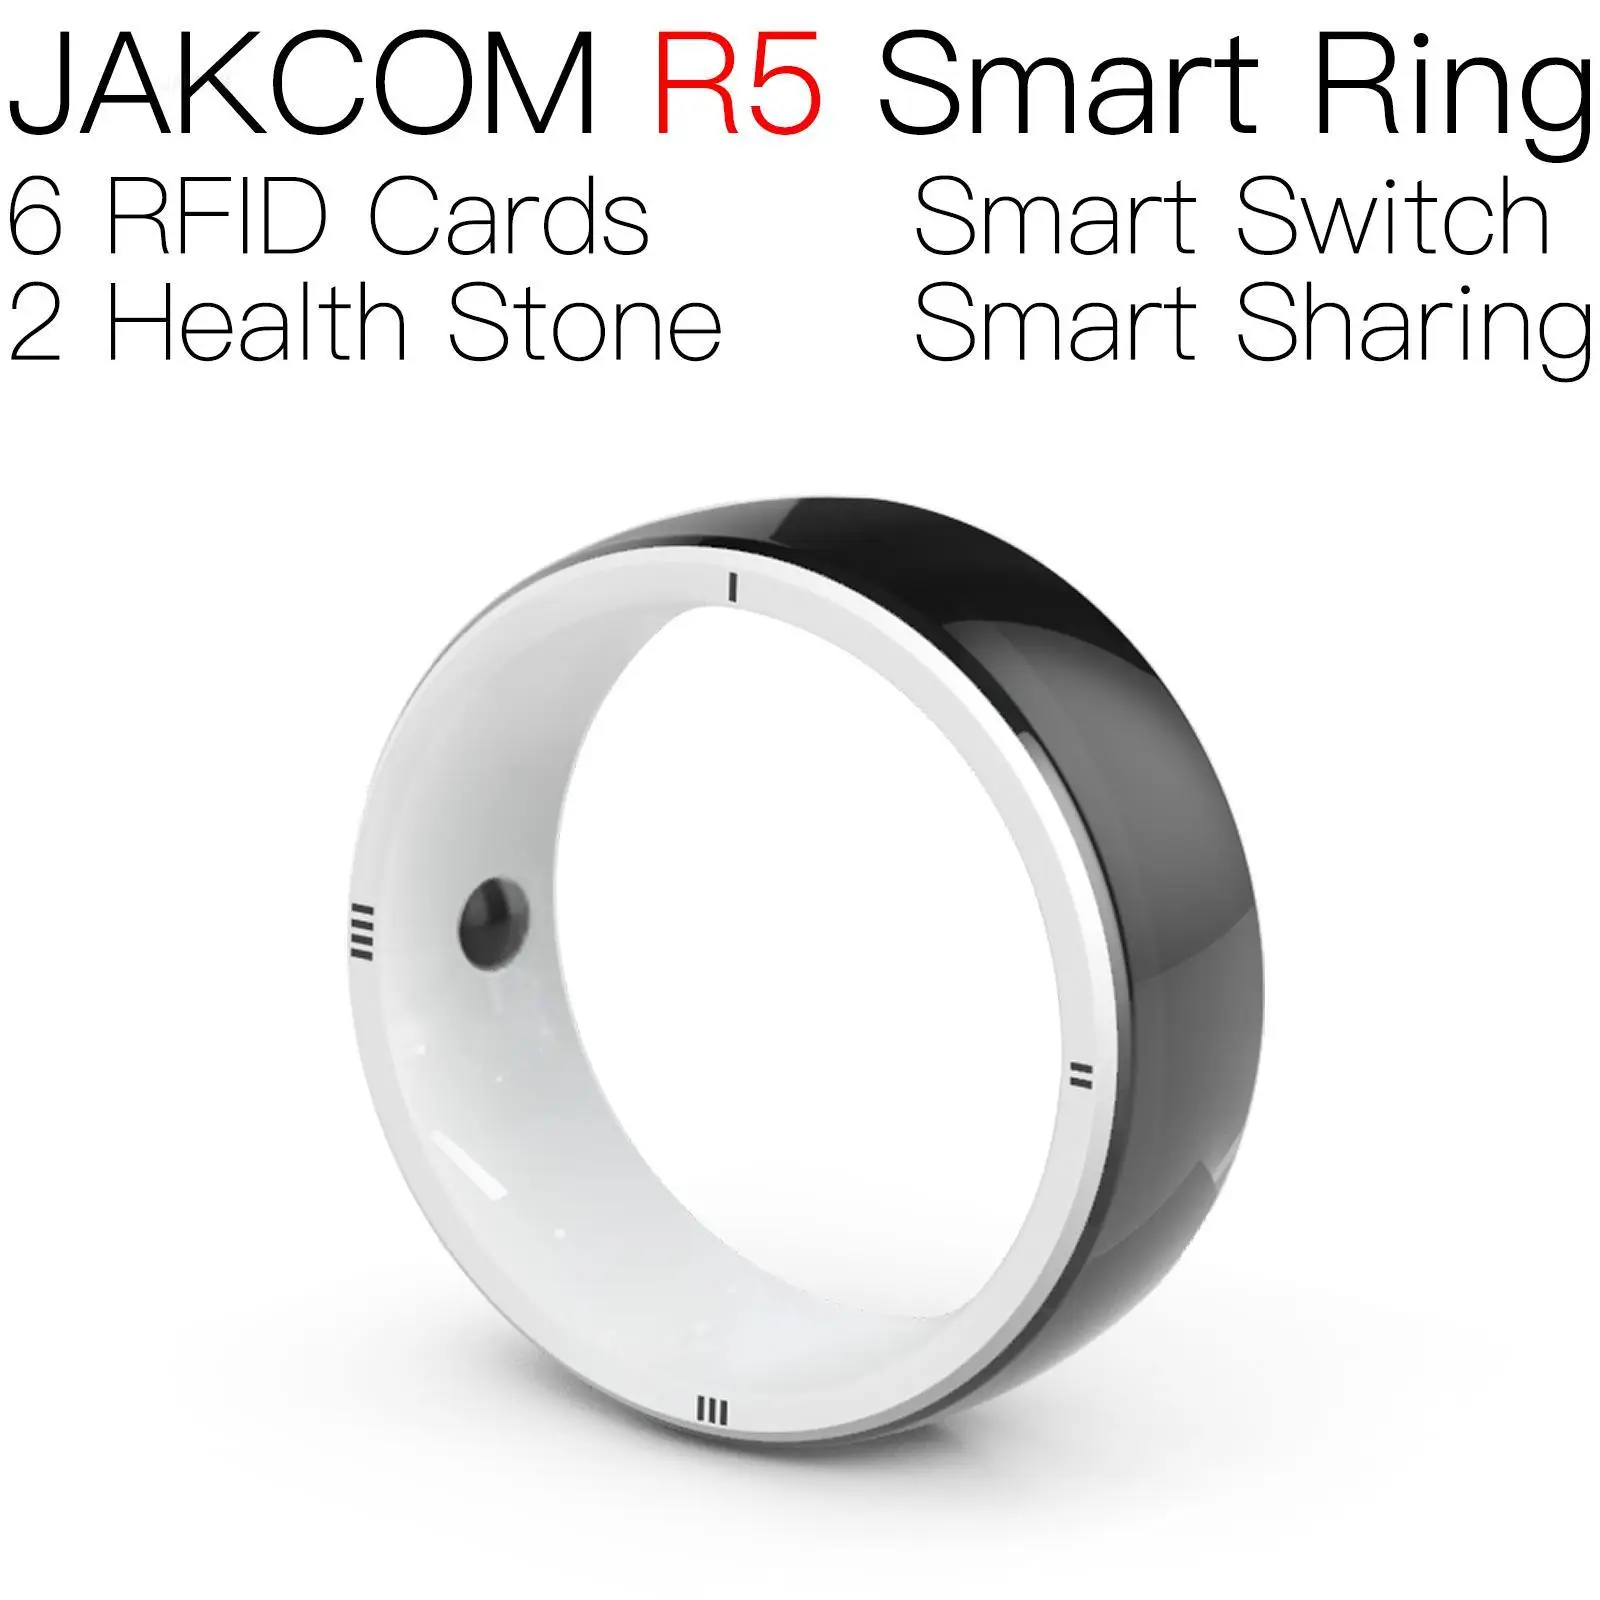 

JAKCOM R5 Smart Ring Newer than knob ventilator rfid key 125khz badge mhz 10pcs tag nfc window sticker rewritable active